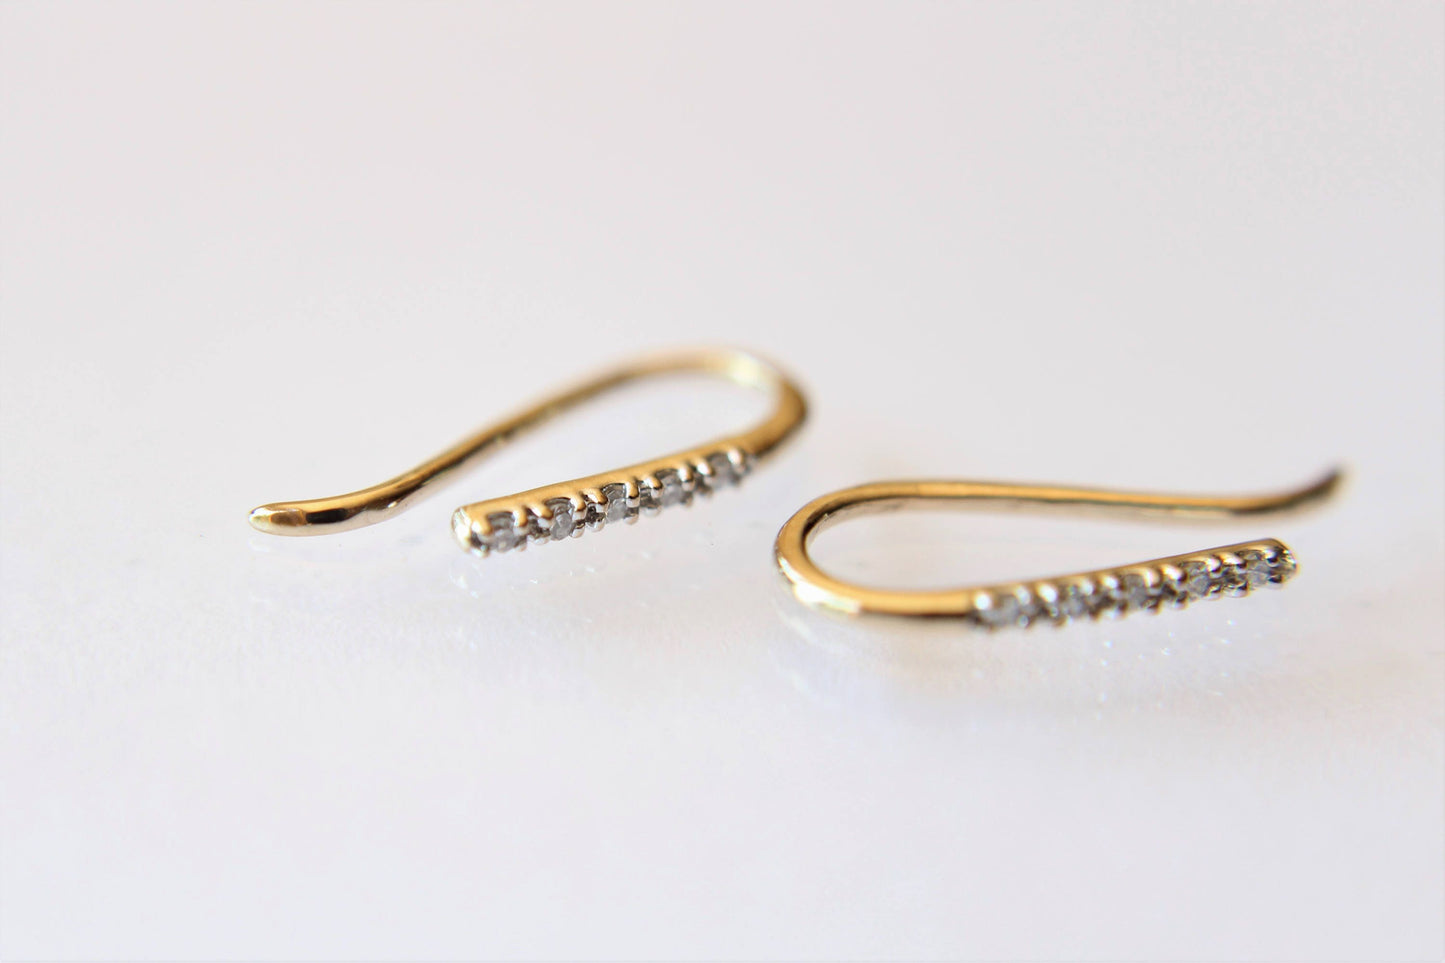 Diamond Line Earrings, Bar Earrings, Solid Gold Bar Earrings, Diamond Earrings, Line Earrings, Modern Chic, Dash Studs, Simple Bold Earring